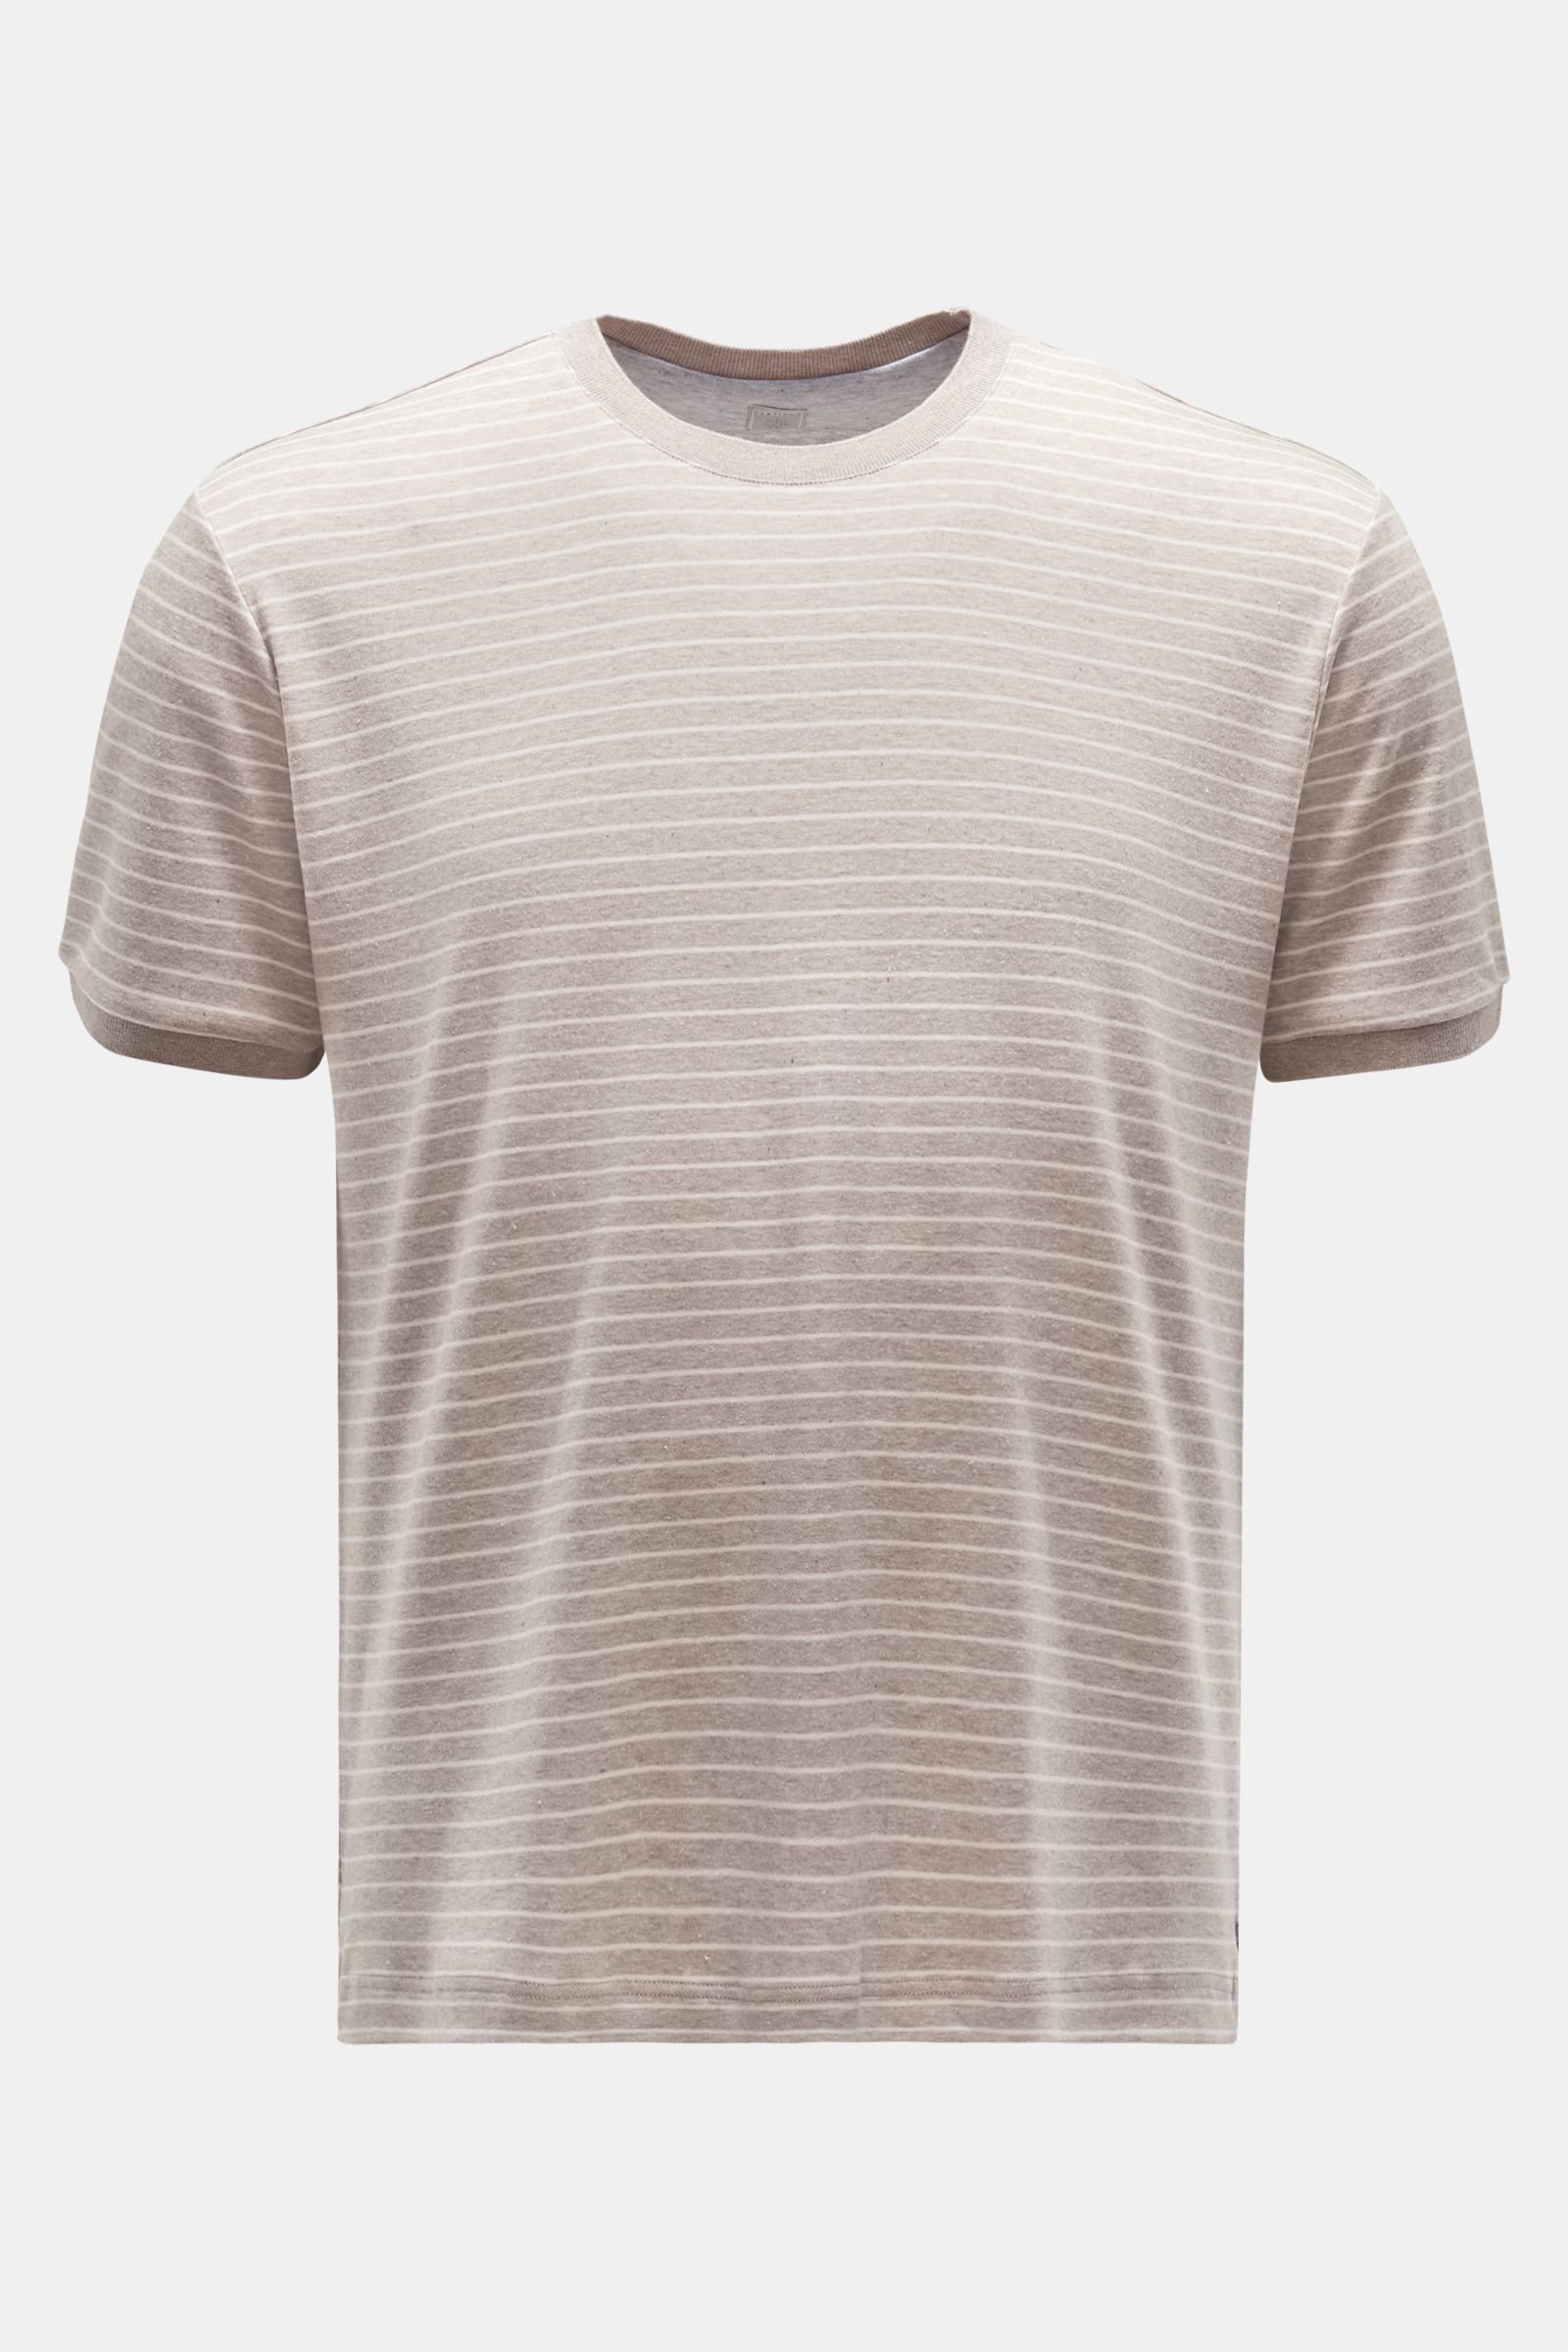 Crew neck T-shirt grey-brown/white striped